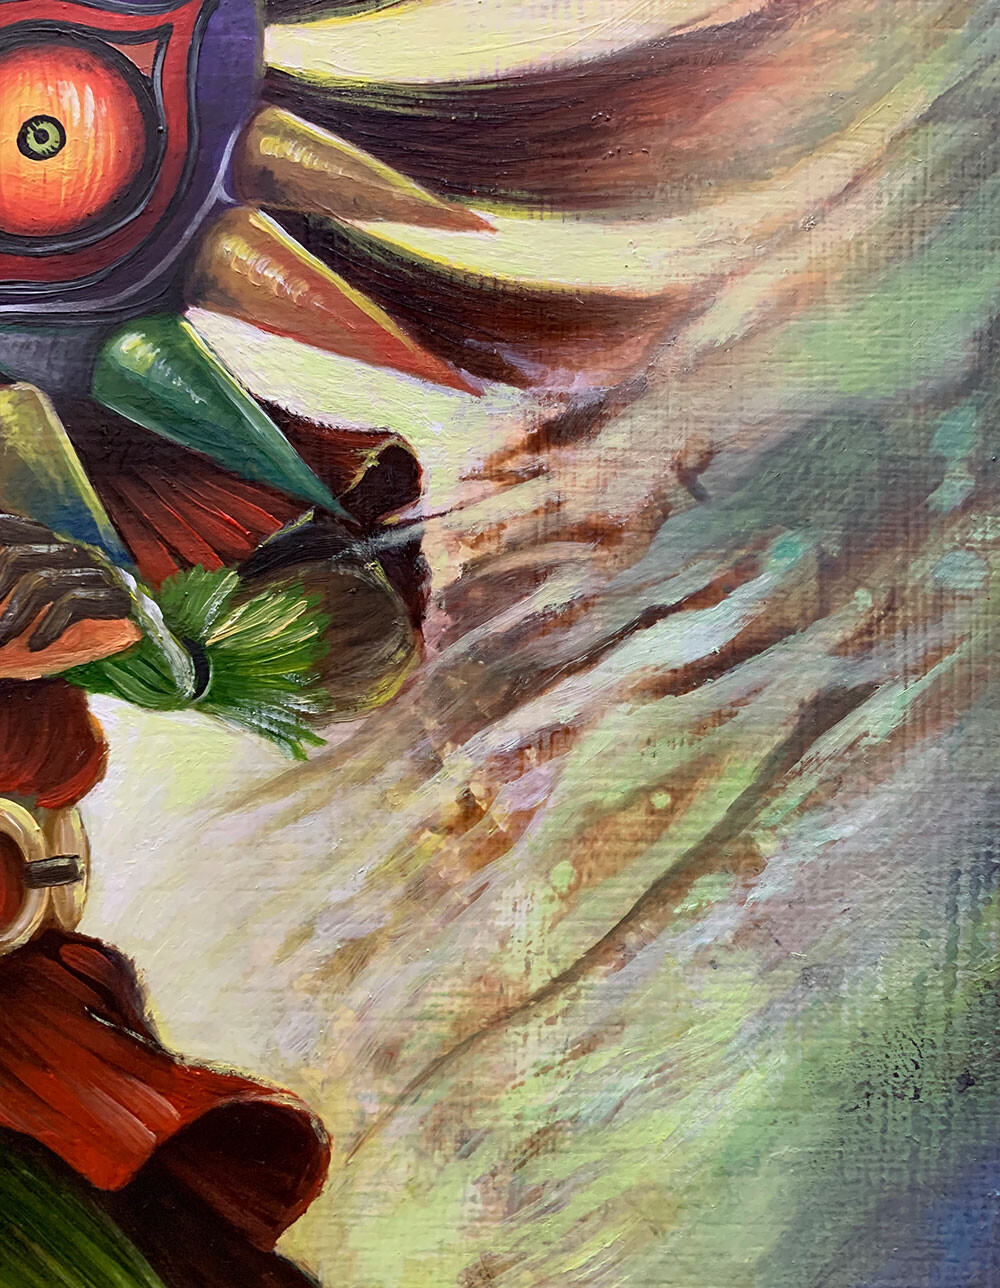 Zelda Majora's Mask - Wall art handmade oil painting on canvas